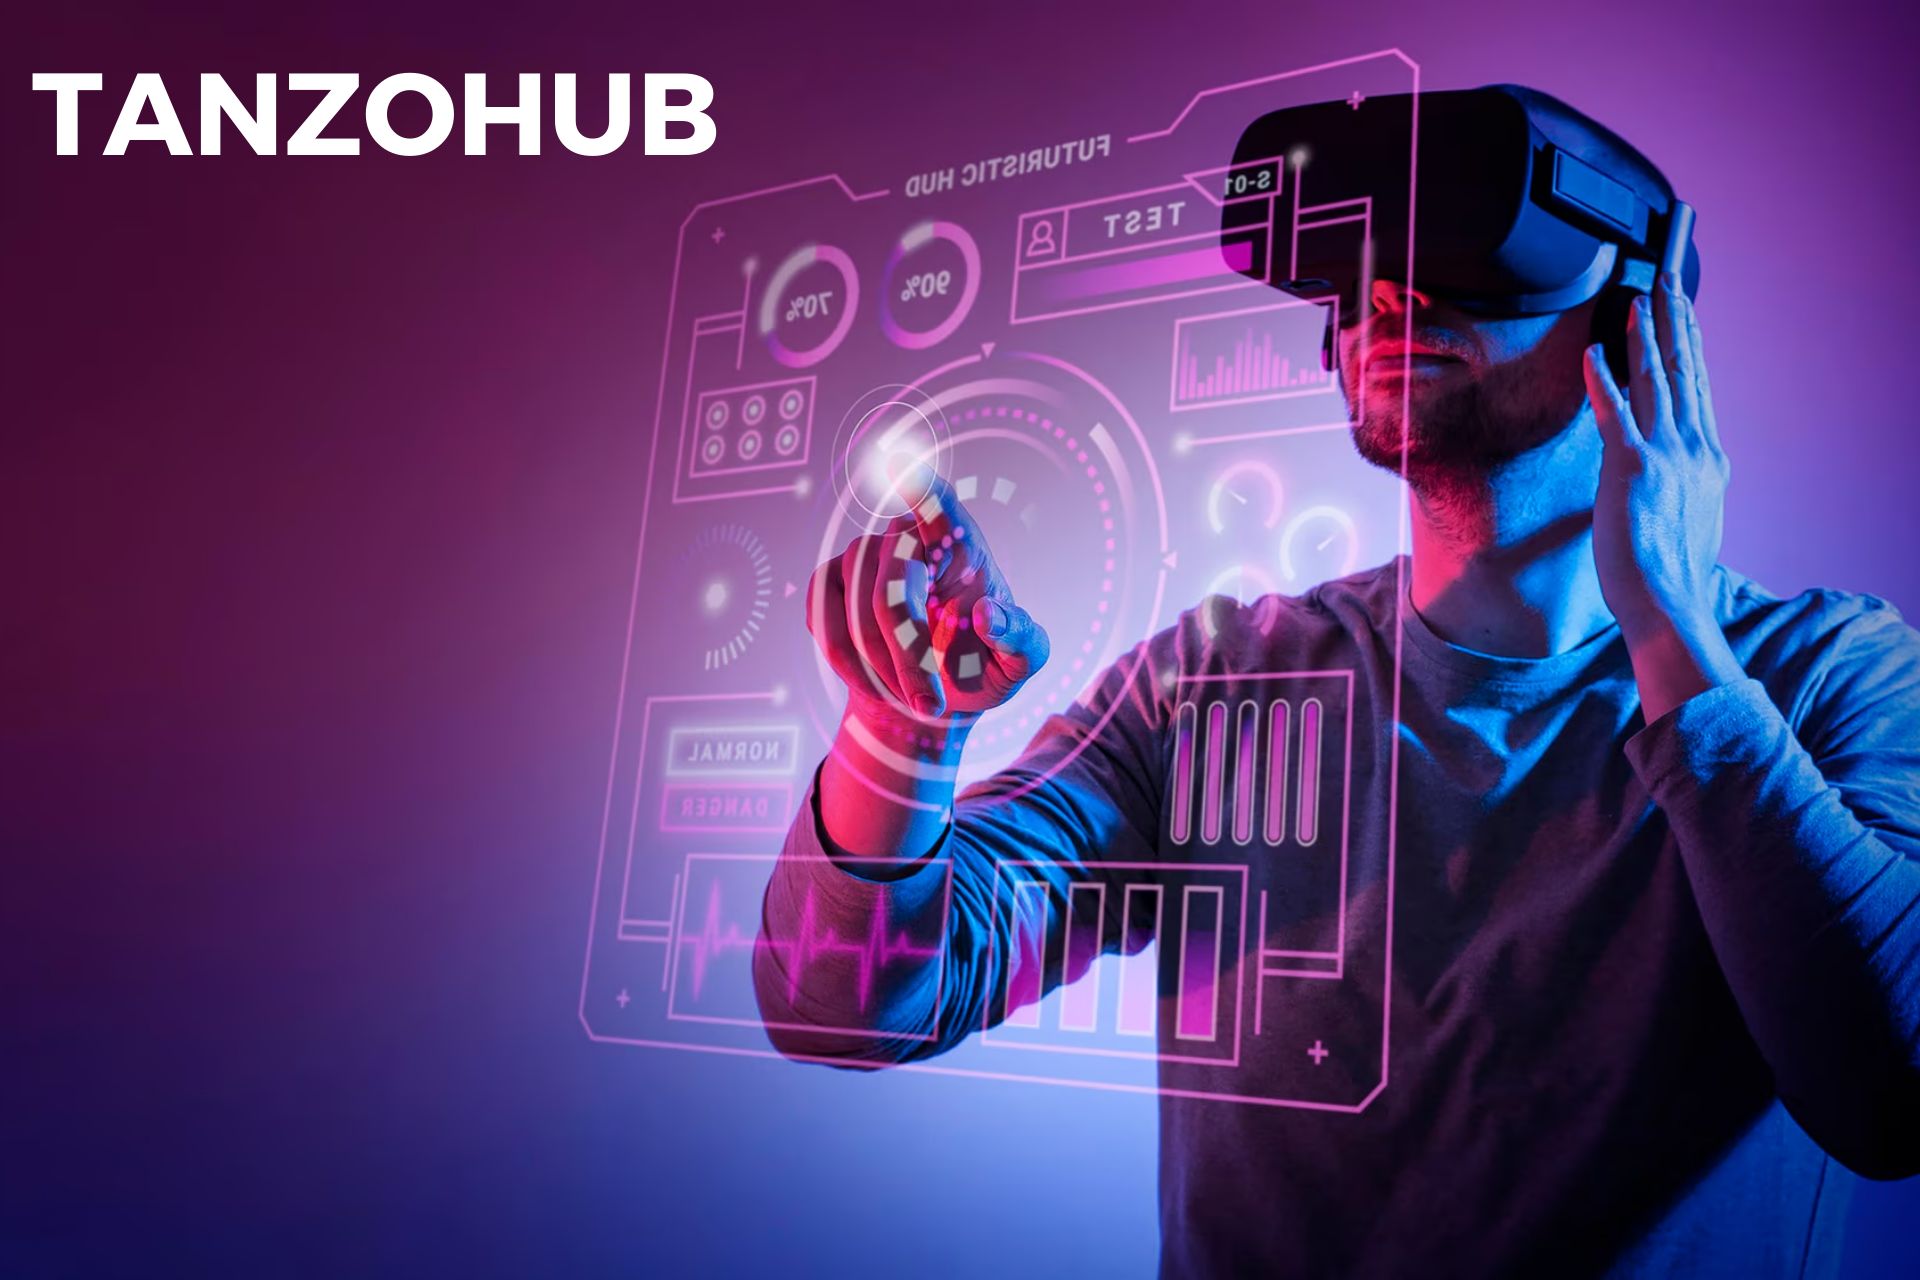 Tanzohub: A Multifaceted Platform Empowering Creativity and Freelancing